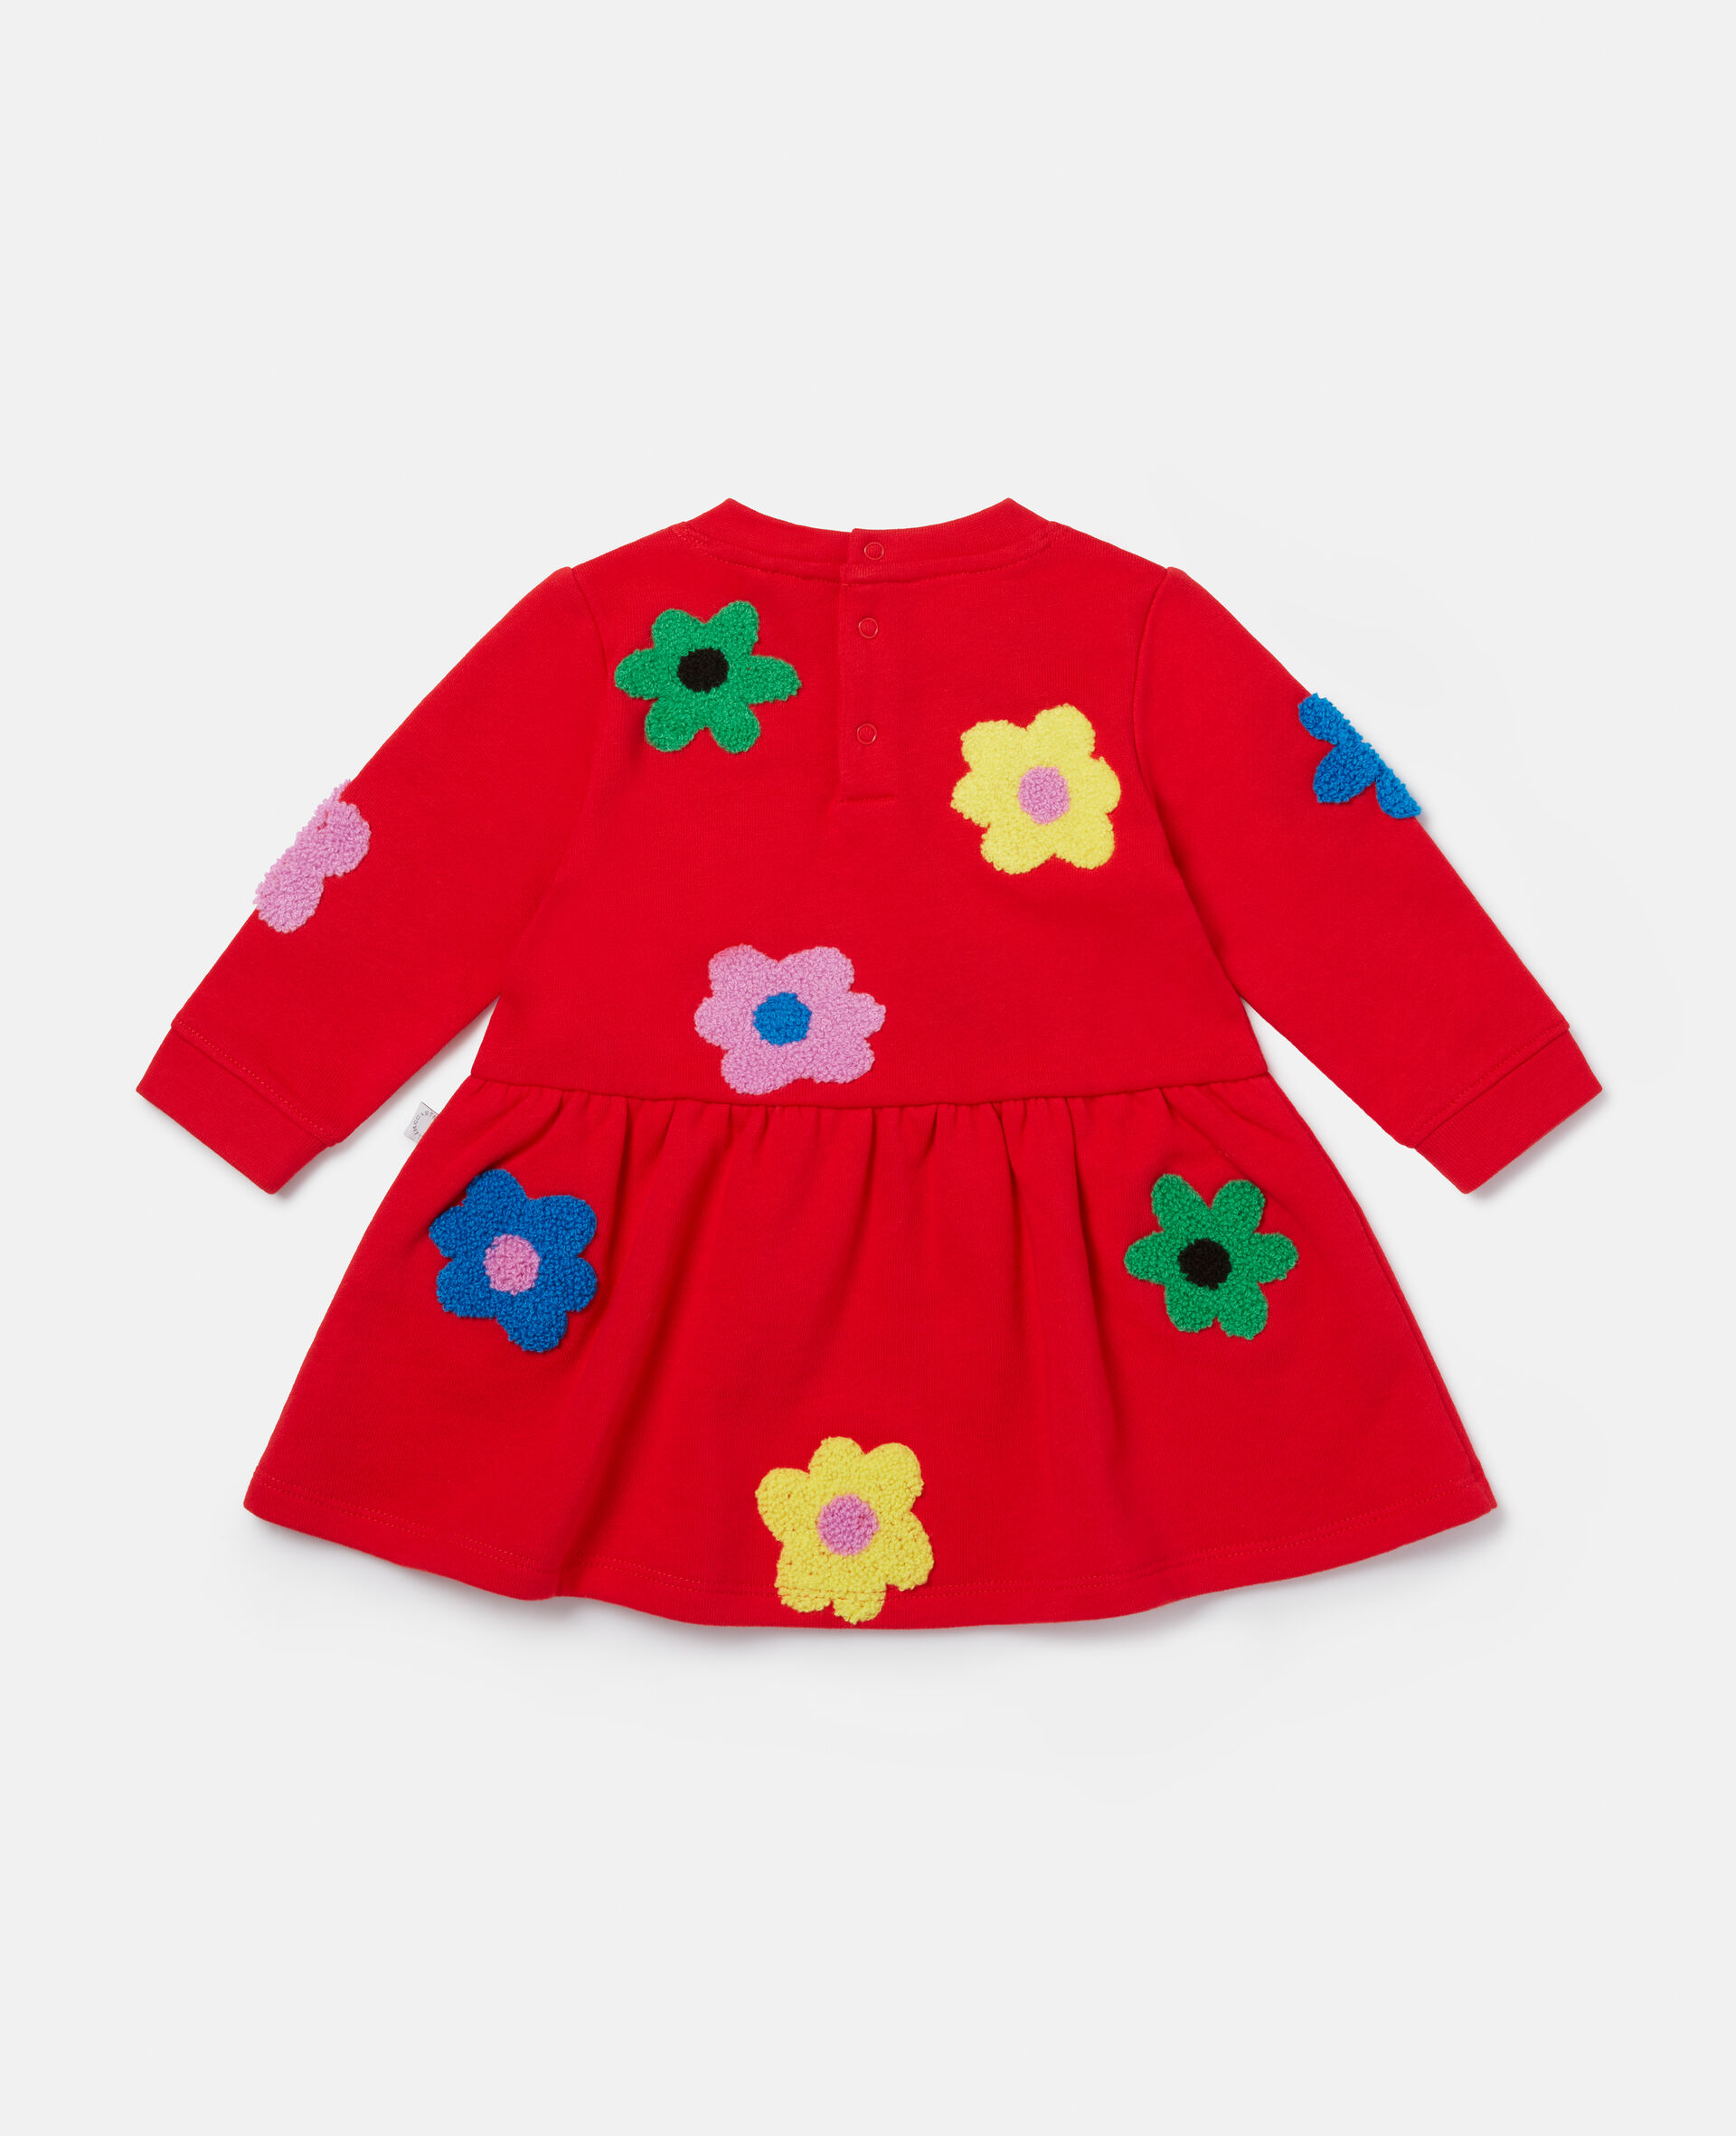 Flower Embroidered Fleece Dress-Red-large image number 3